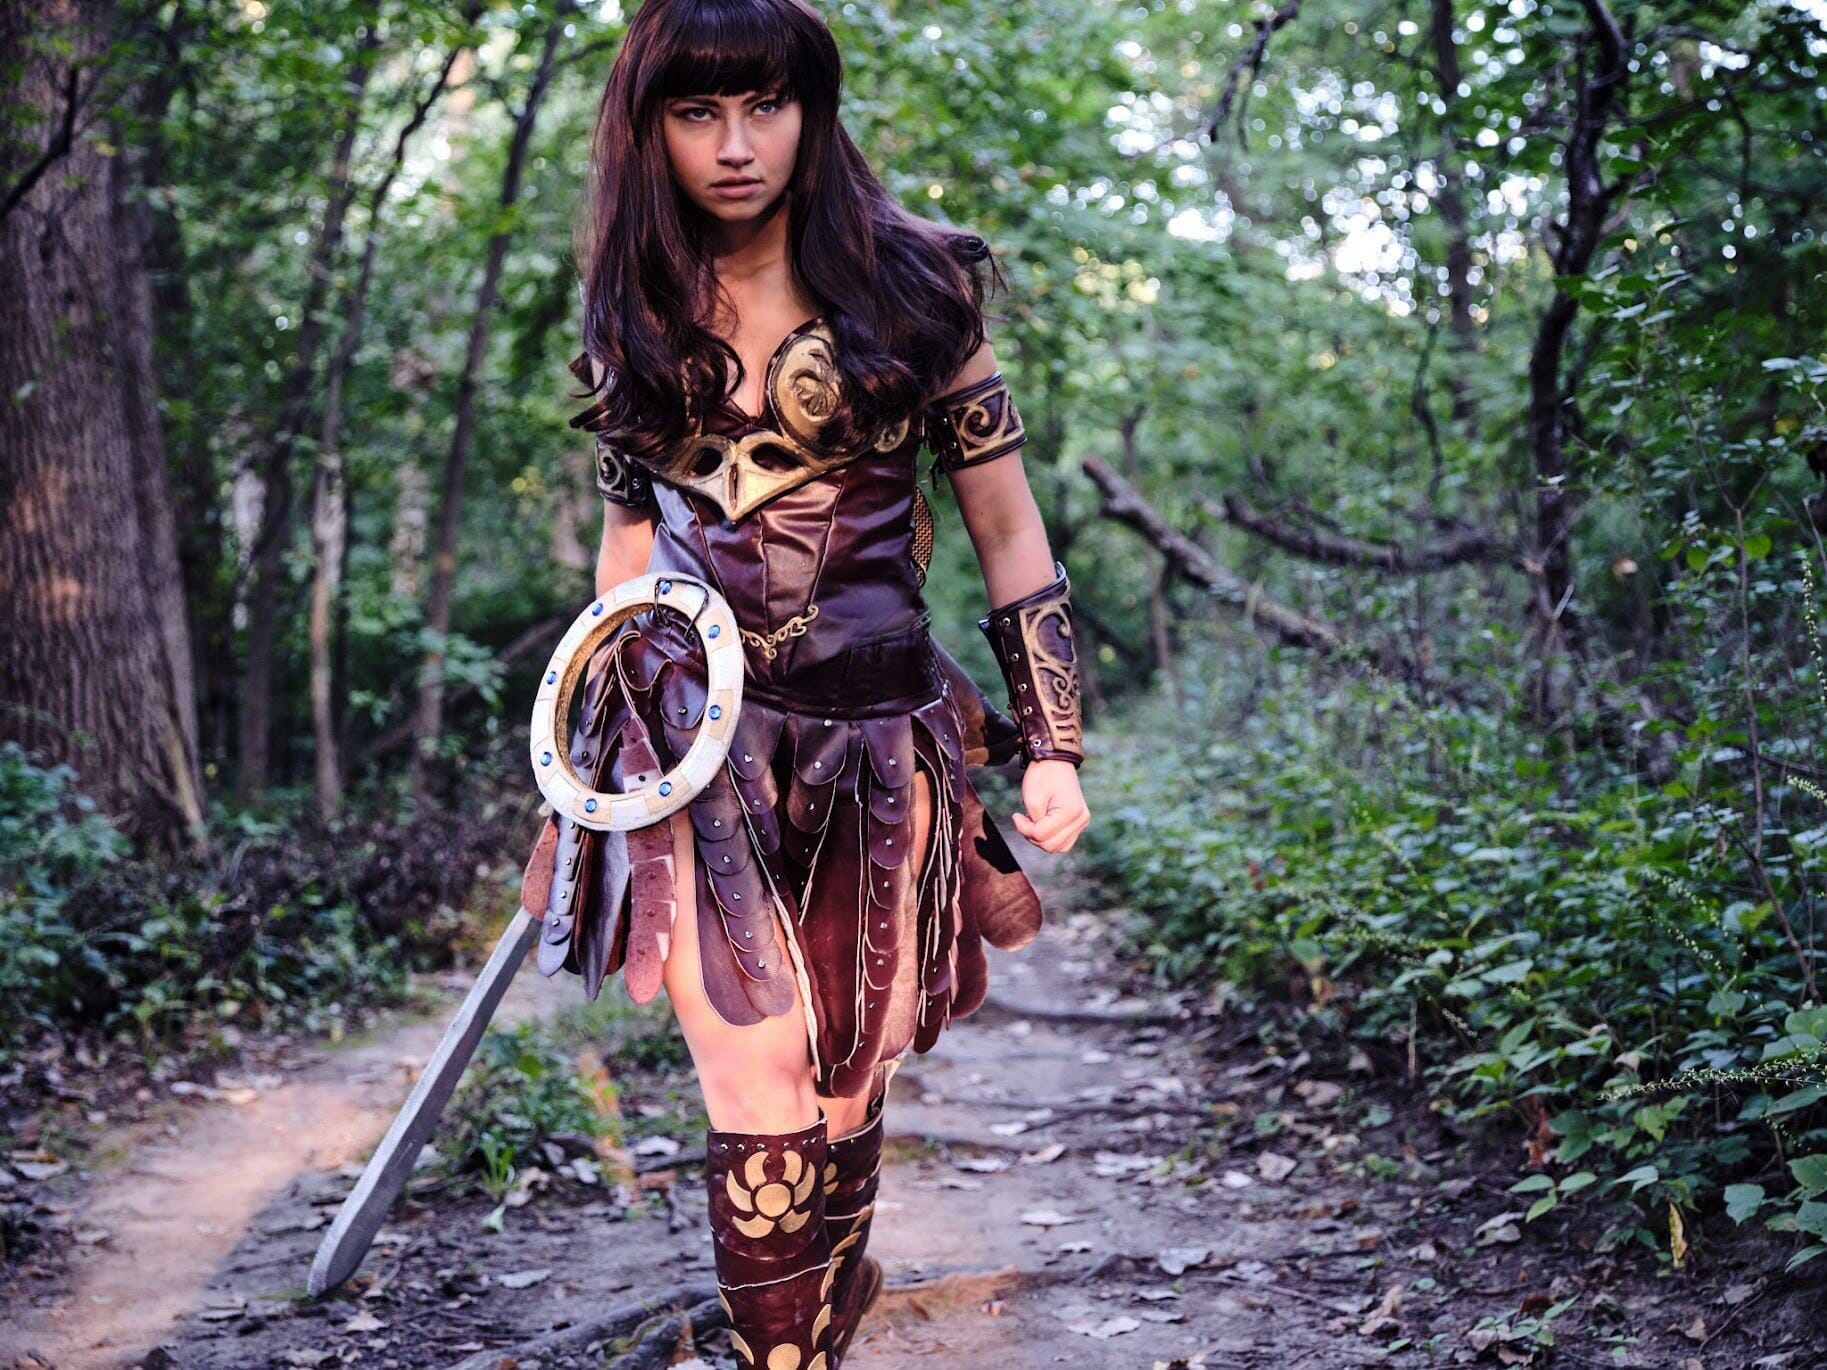 Xena Warrior Princess cosplay